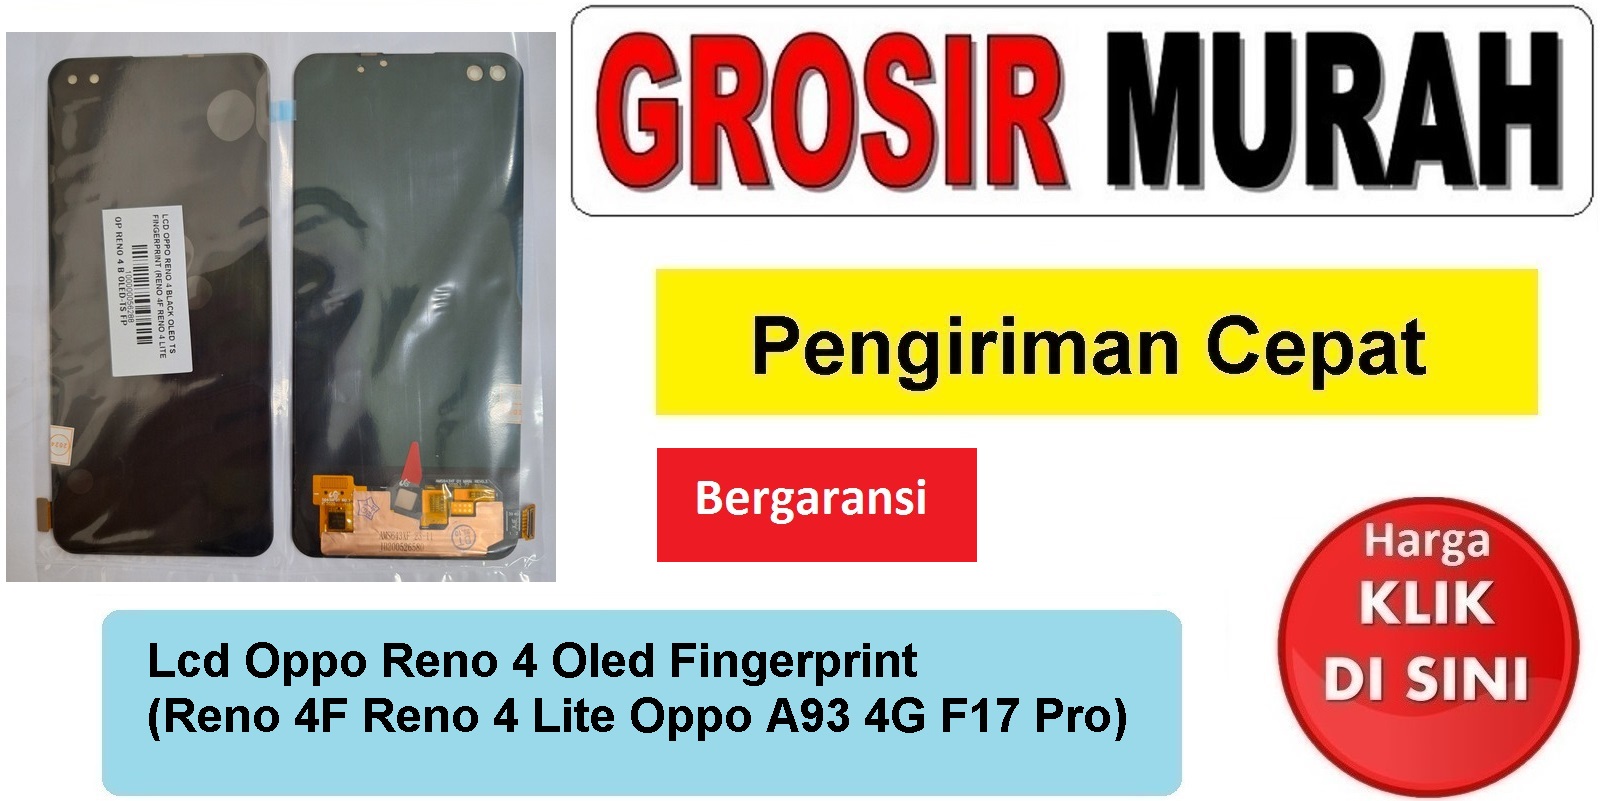 Lcd Oppo Reno 4 Oled Fingerprint (Reno 4F Reno 4 Lite Oppo A93 4G F17 Pro) Fullset Touchscreen Ts Touch screen Display Spare Part hp Grosir